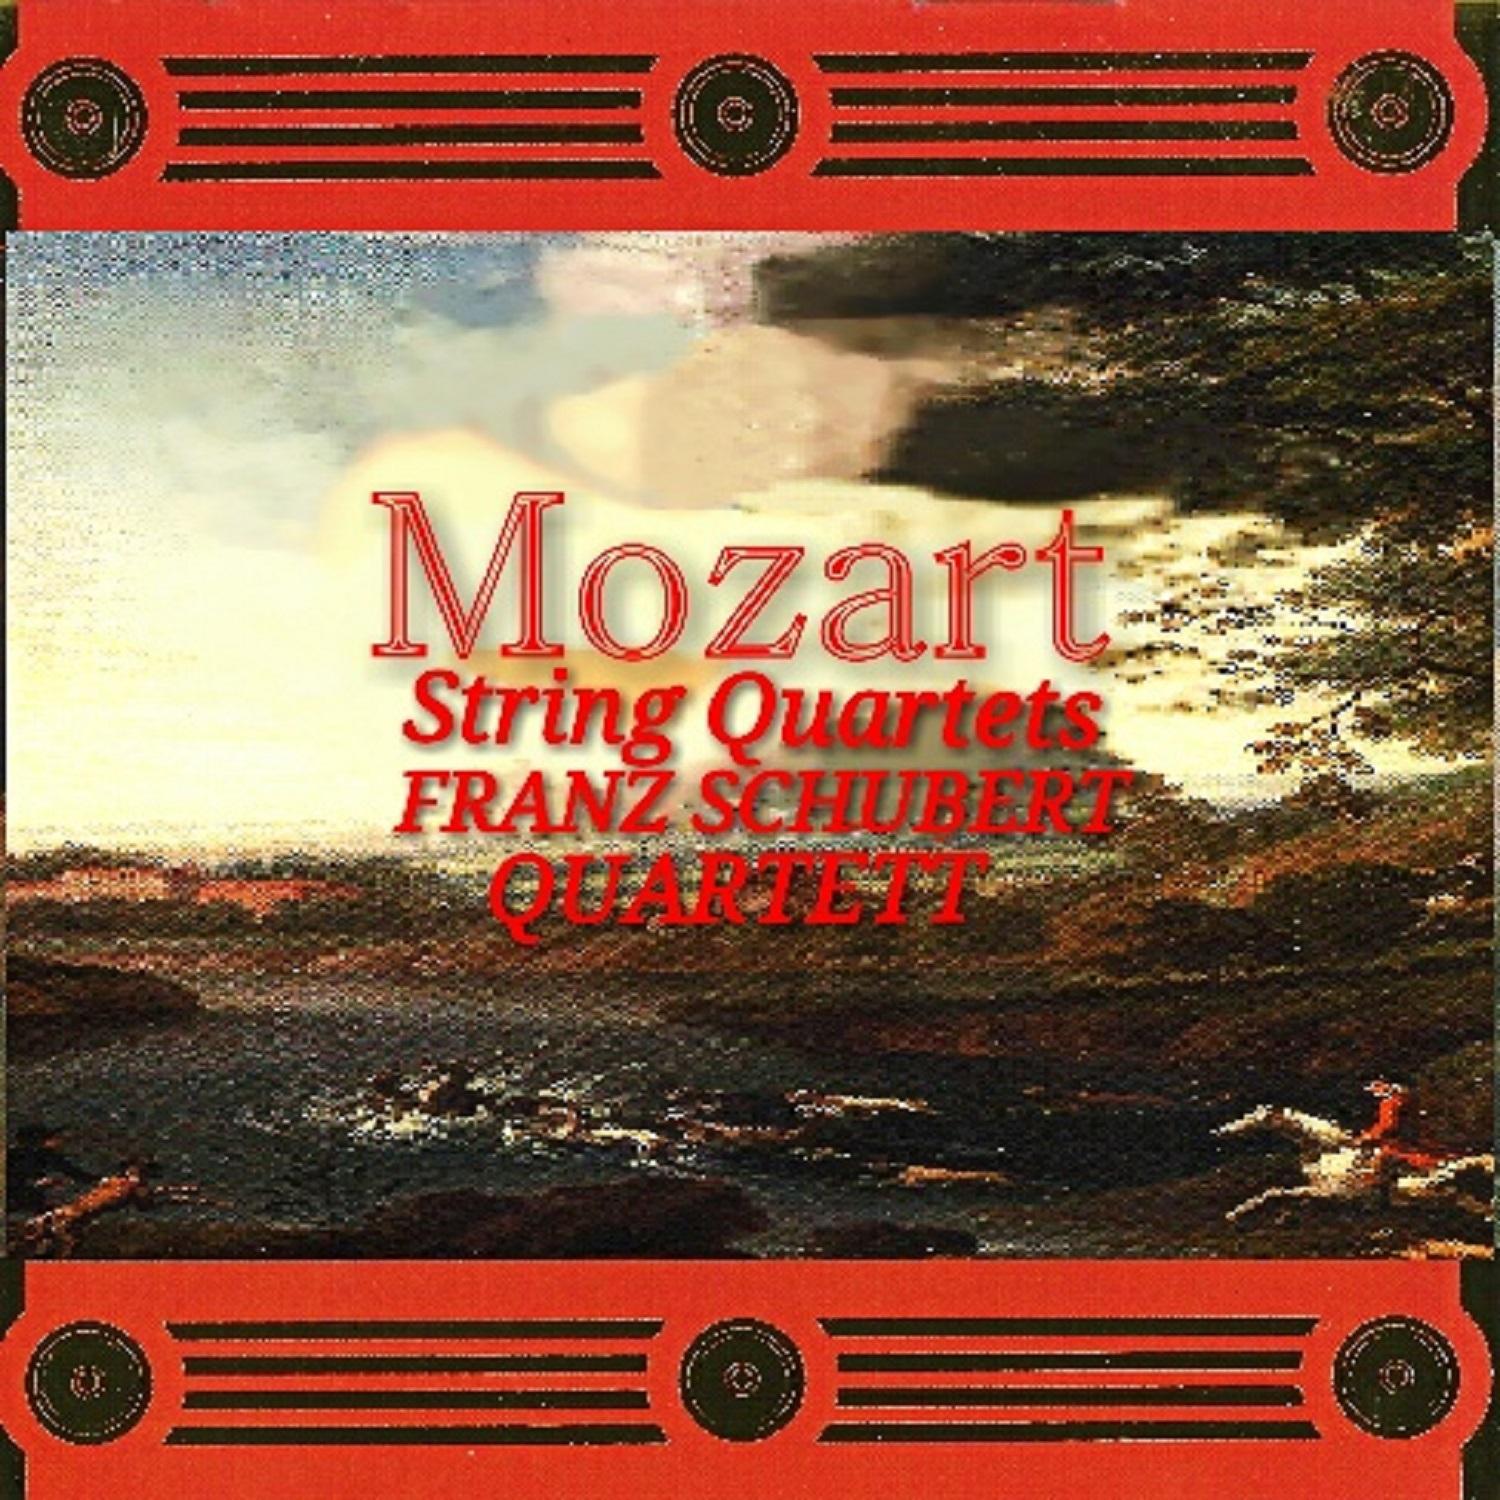 String Quartet No. 17 in B-Flat Major, K. 458: I. Allegro vivace assai